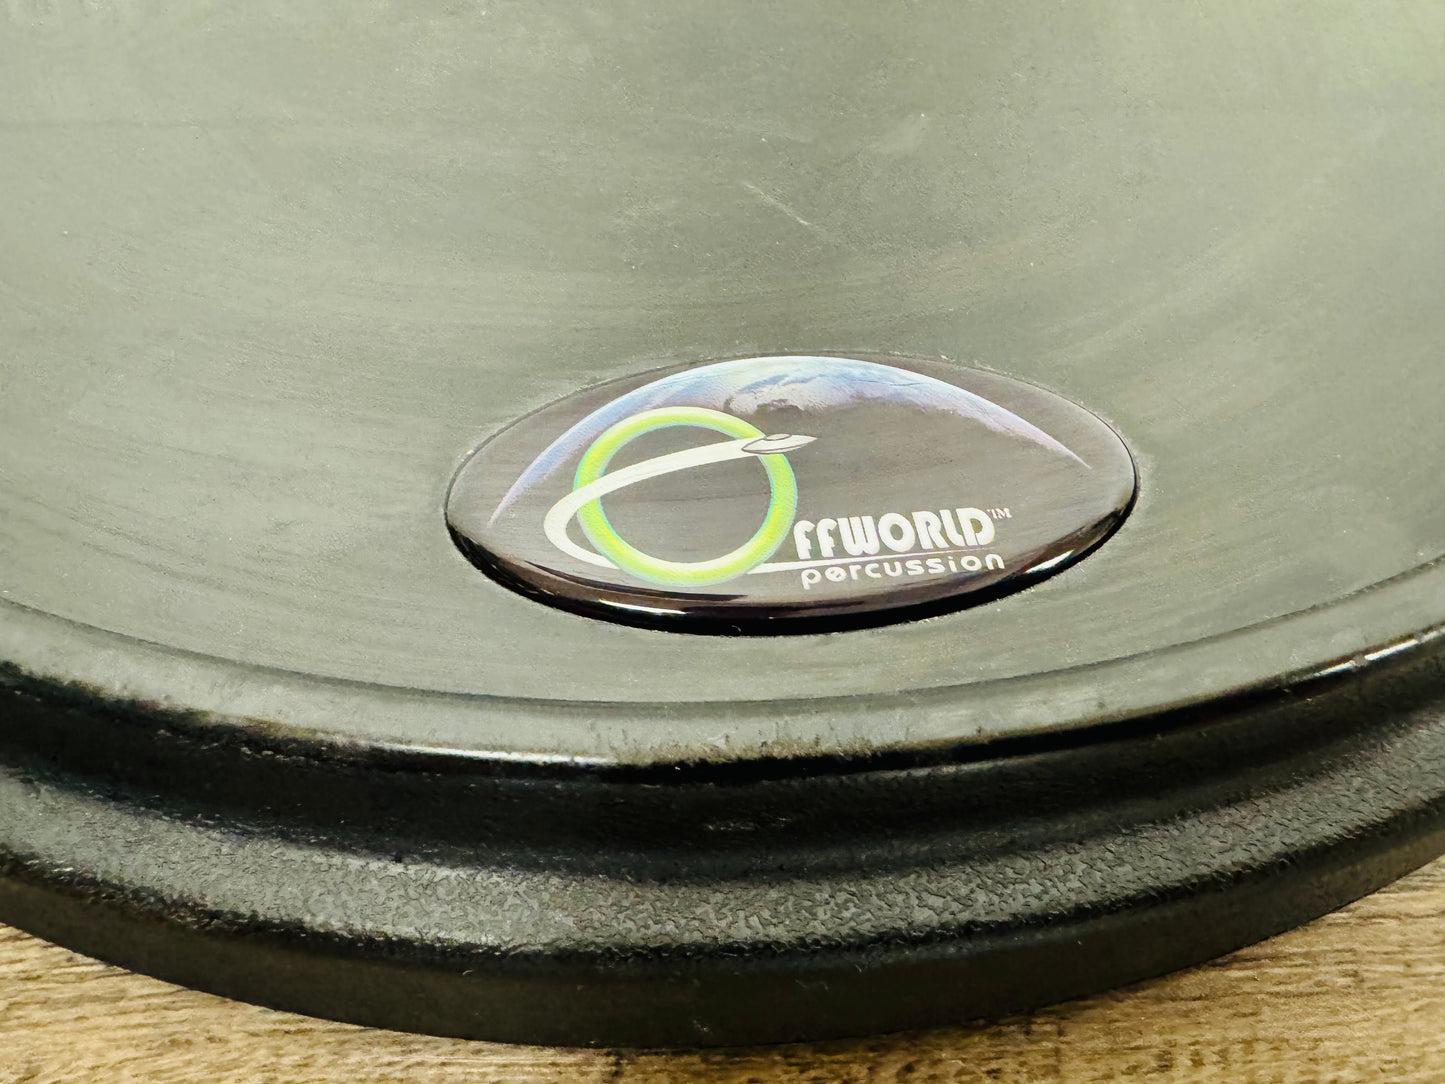 Offworld 12” Practice Drum Pad with Drumsticks